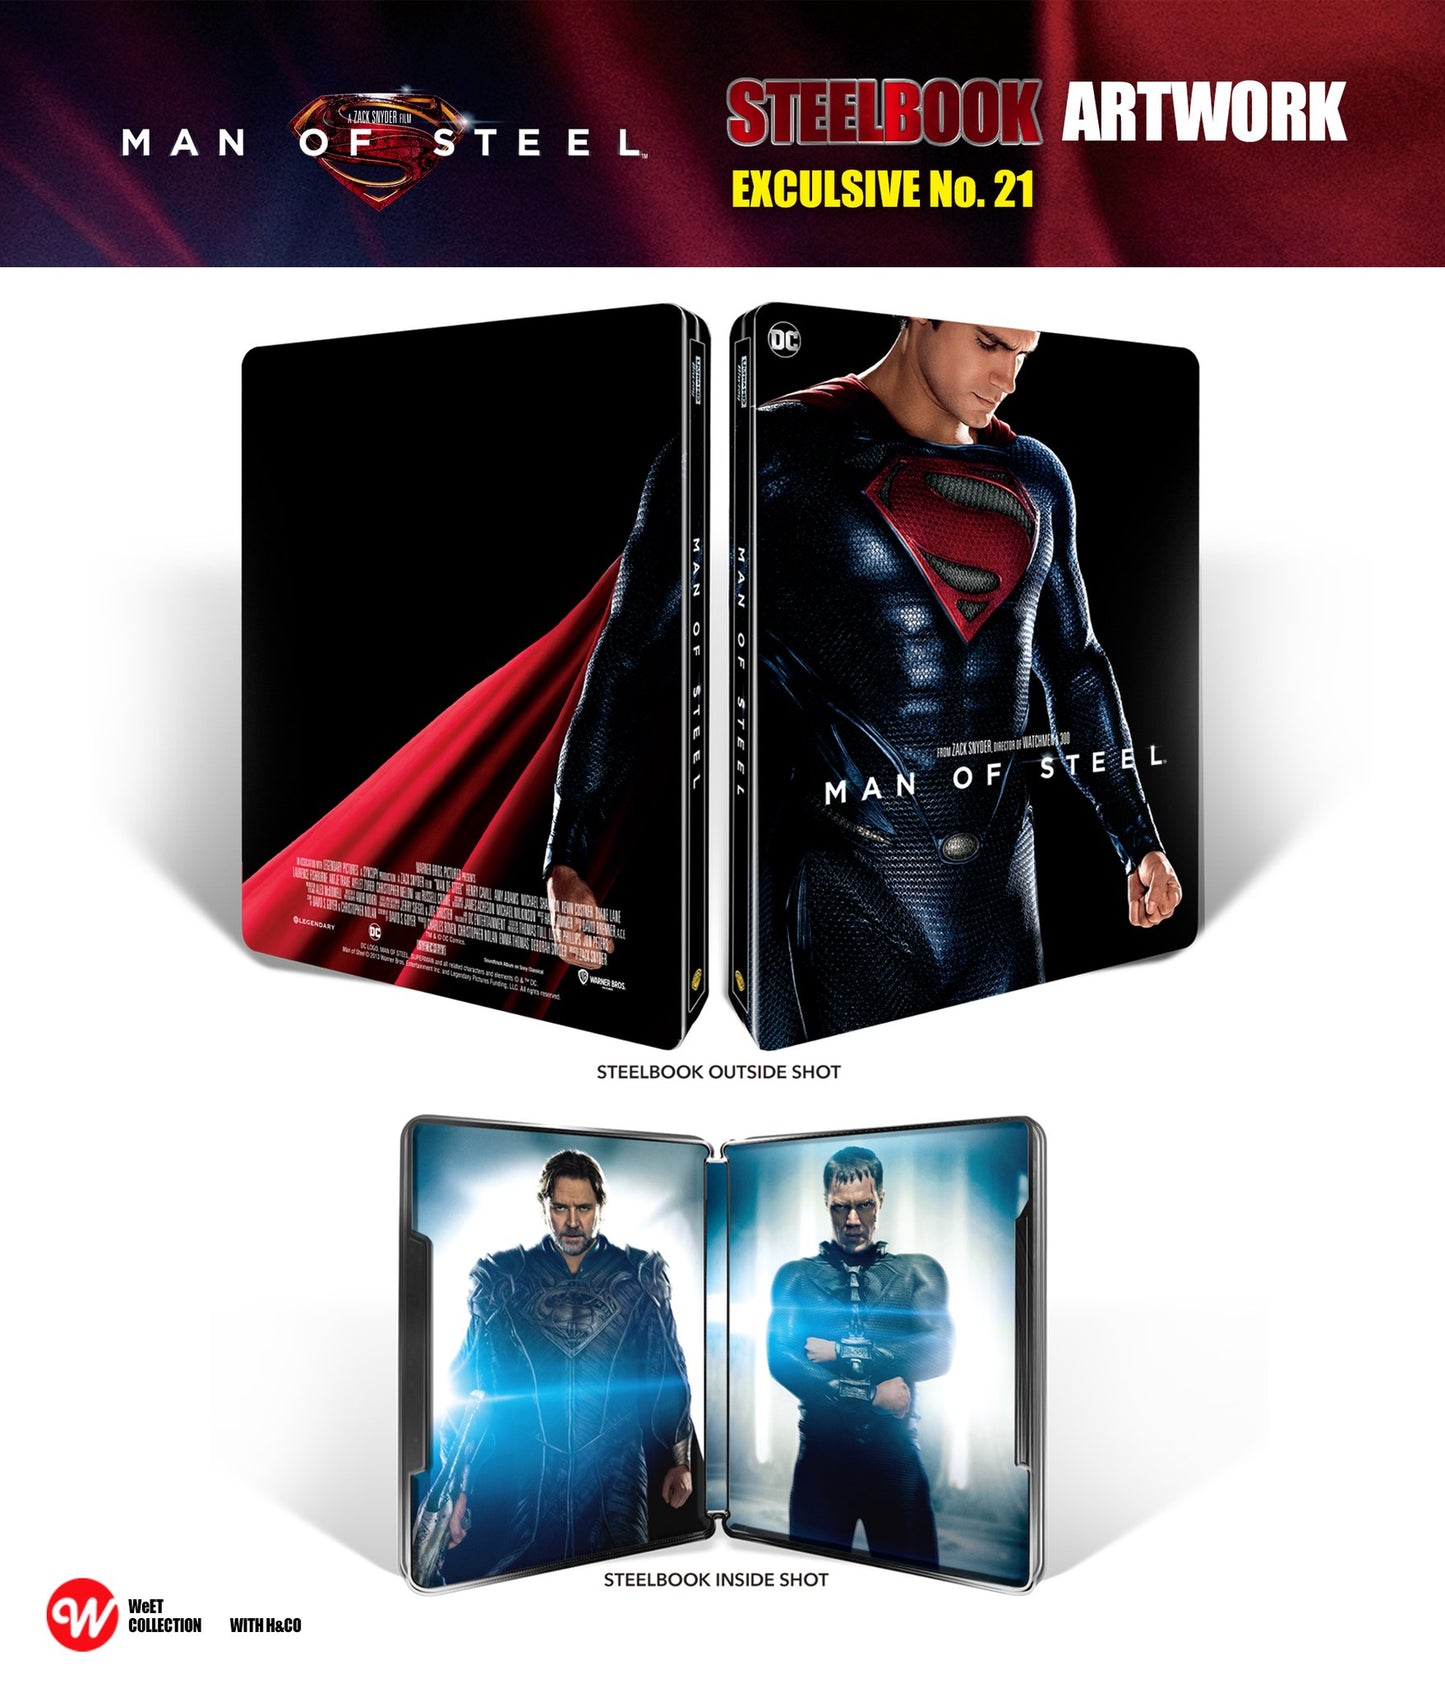 Man Of Steel 4K 3D Blu-ray Steelbook WeET Collection Exclusive #21 HDN GB Pre-Order Full Slip A1